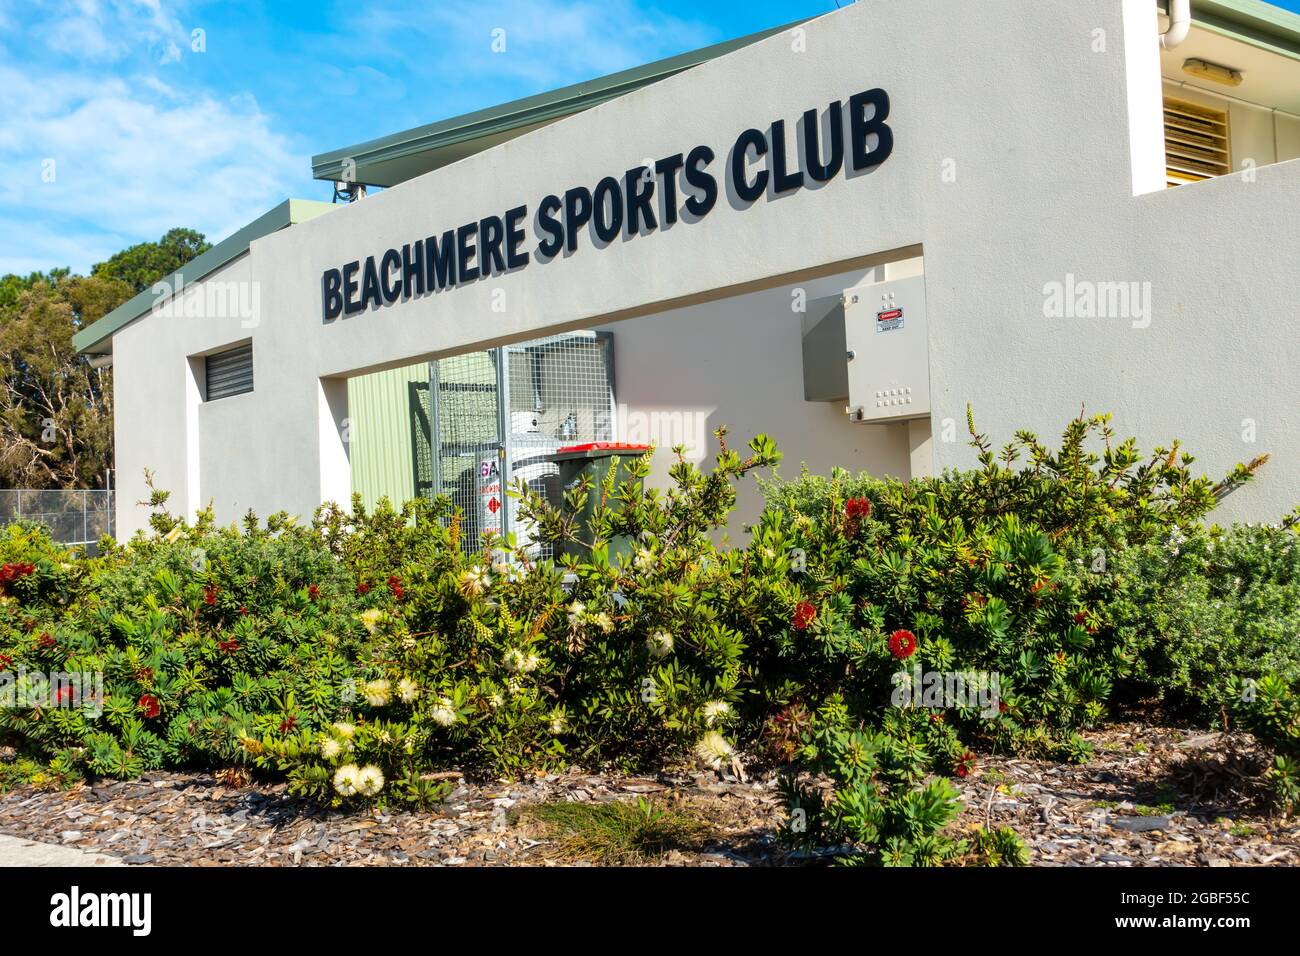 Beachmere Sports Club, Queensland Australia. Stock Photo